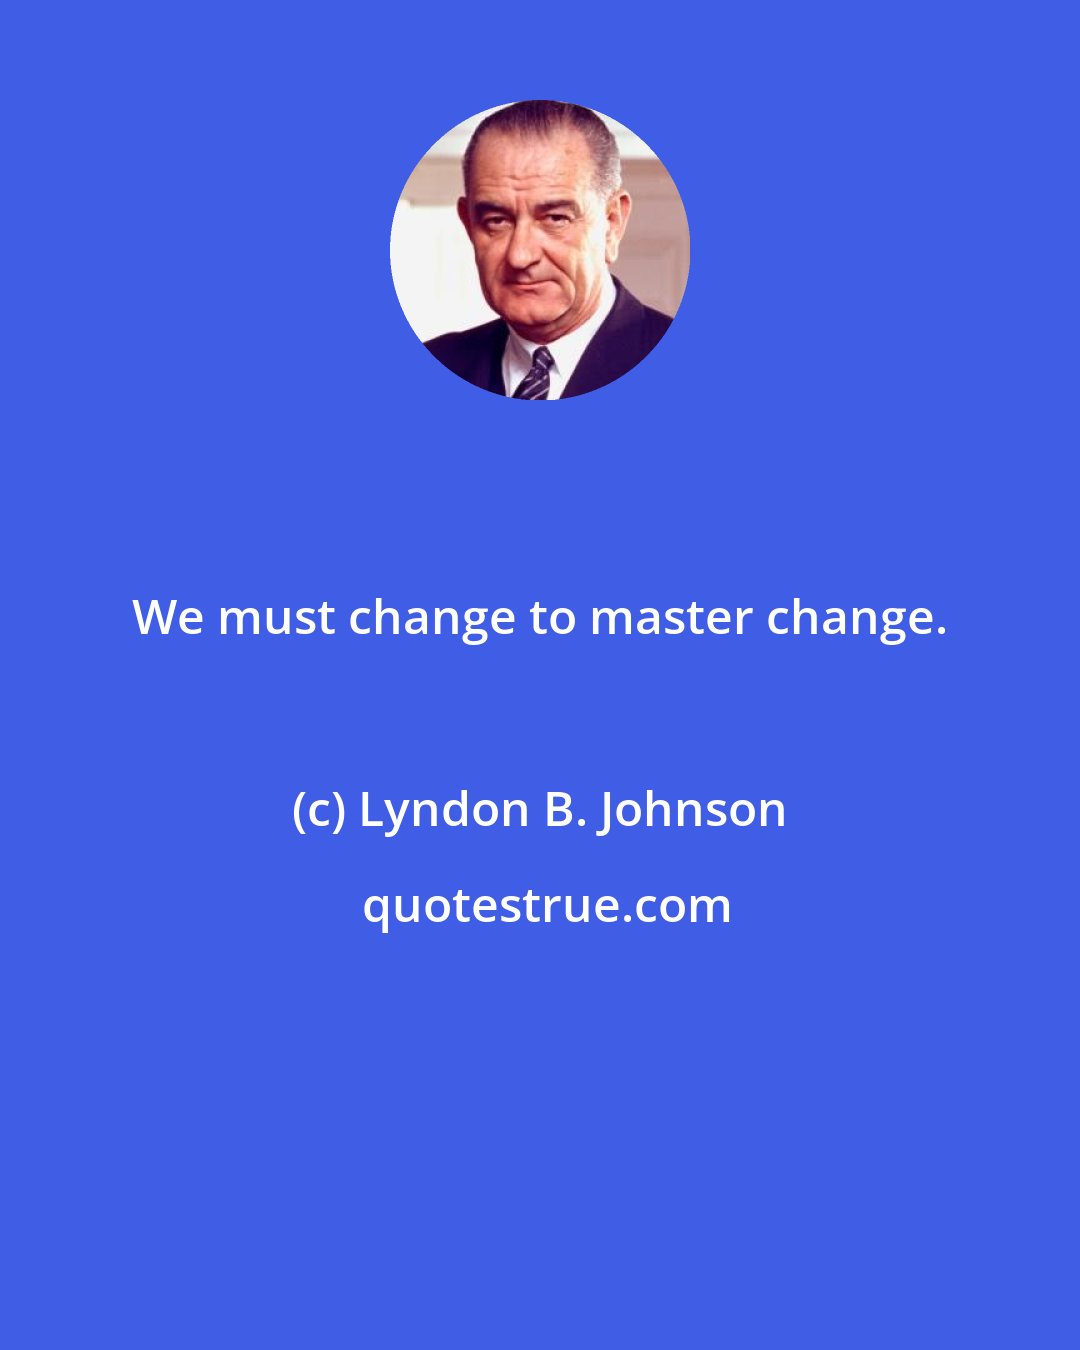 Lyndon B. Johnson: We must change to master change.